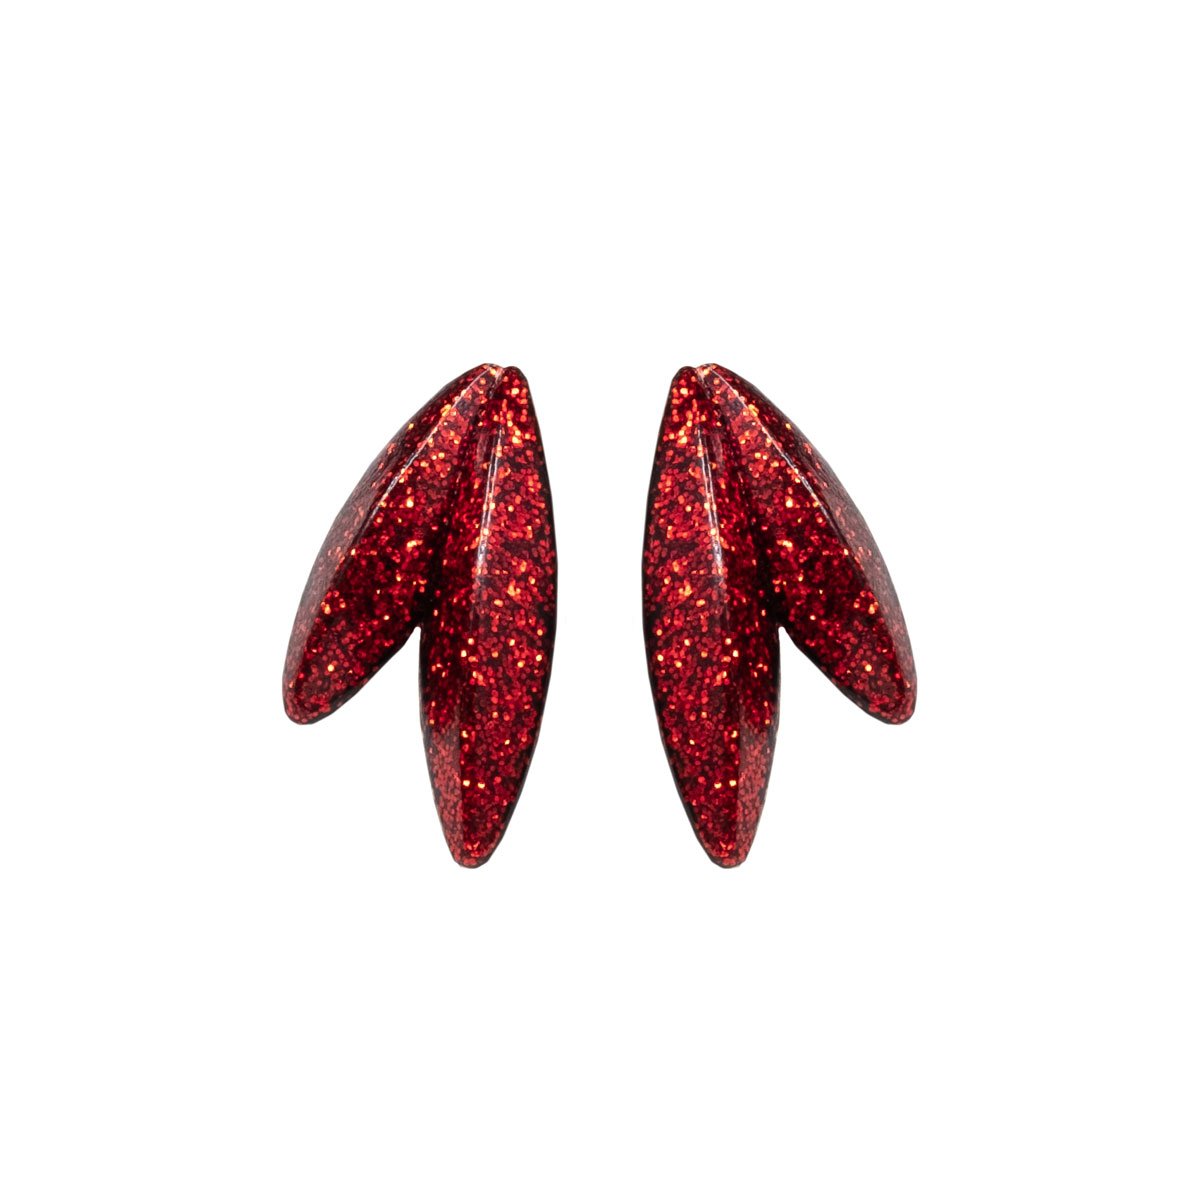 Twin-LEAVES ✕ Shine earrings, red